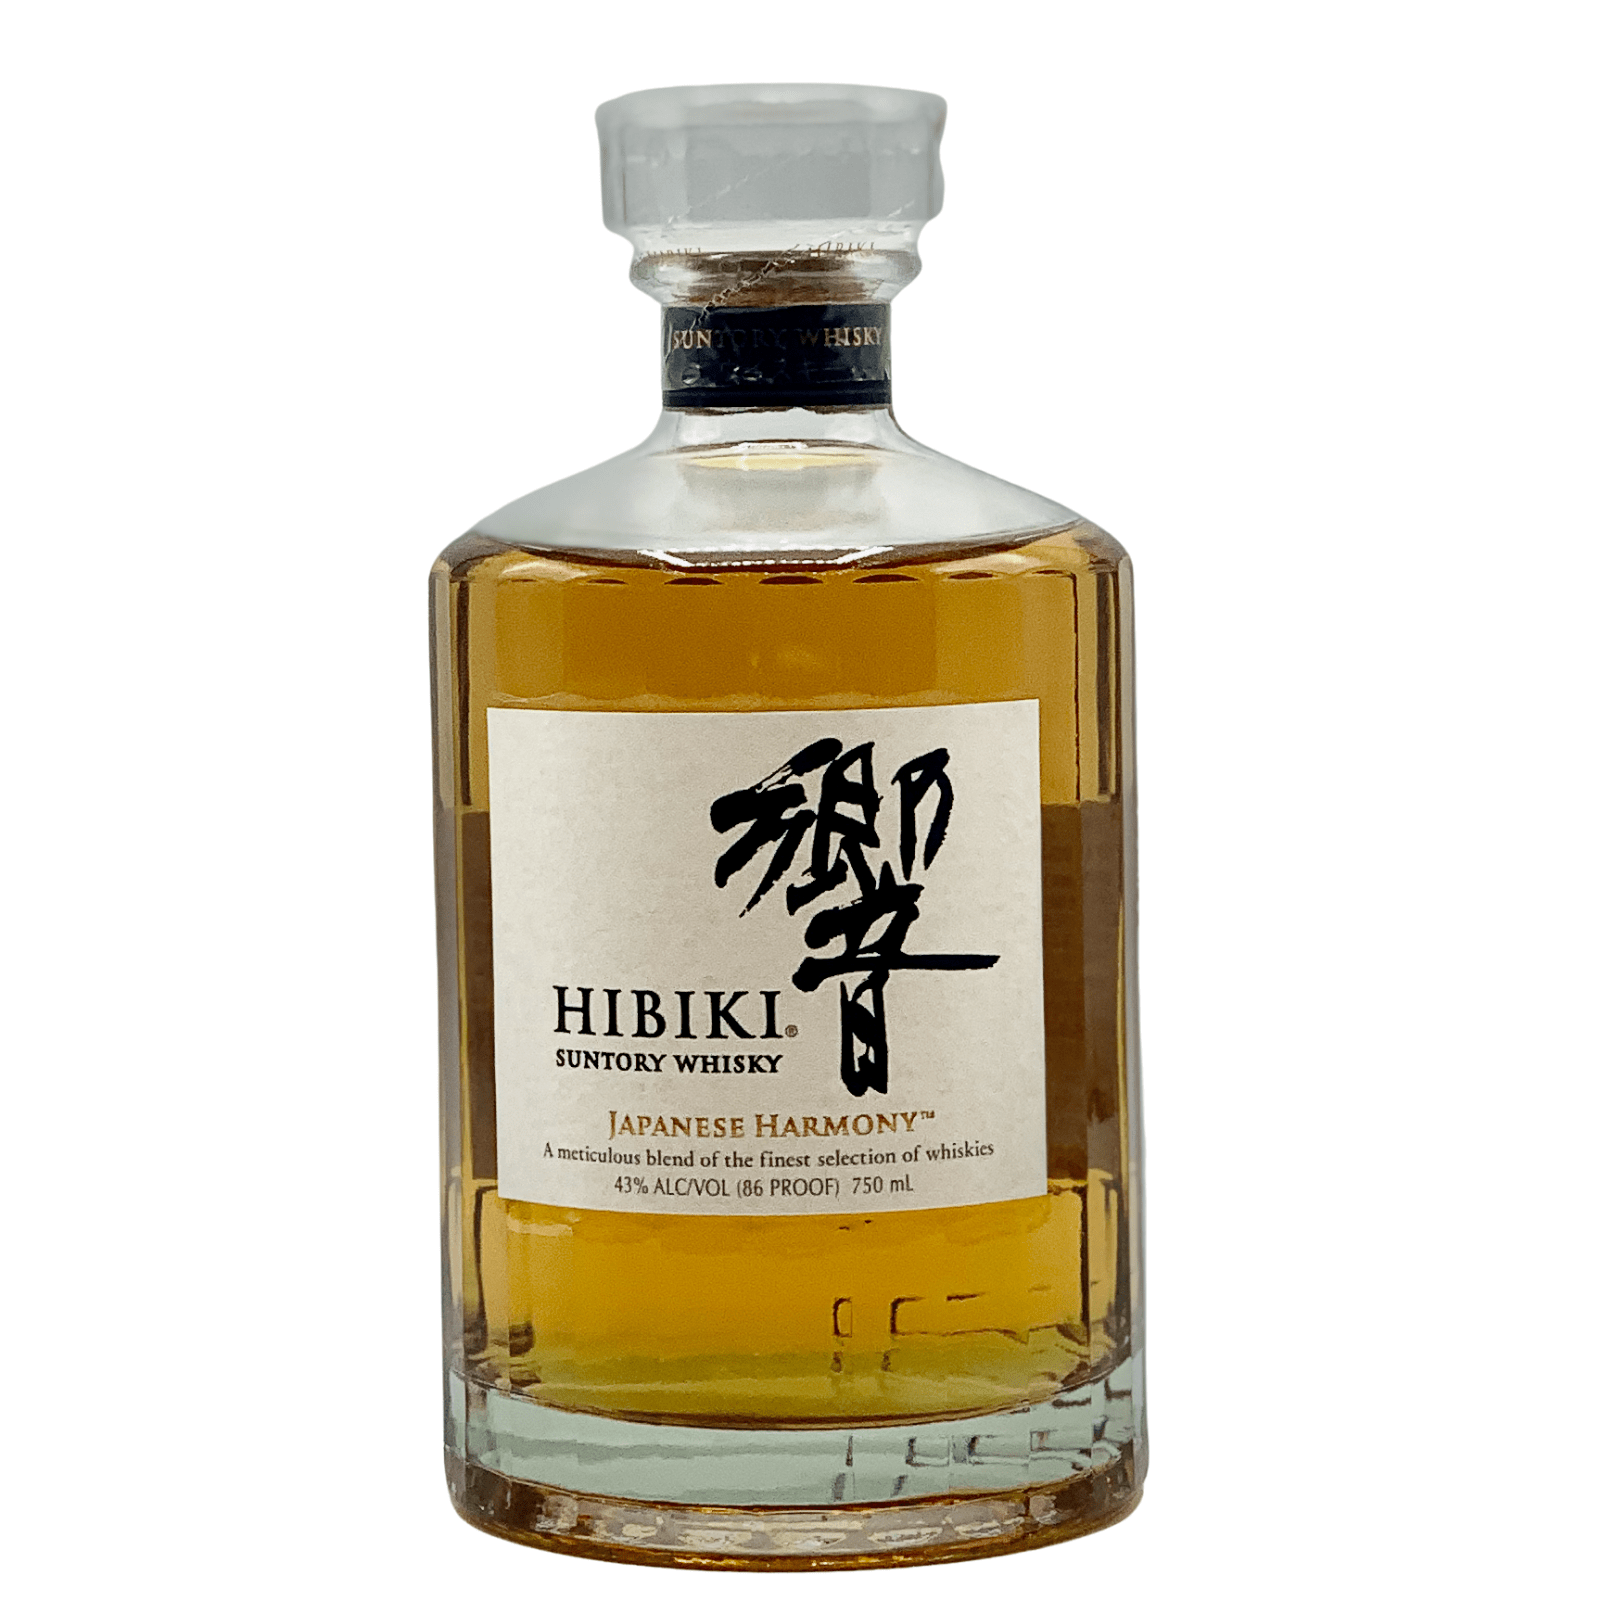 2022 Suntory Hibiki Blossom Harmony Blended Whisky 750ml